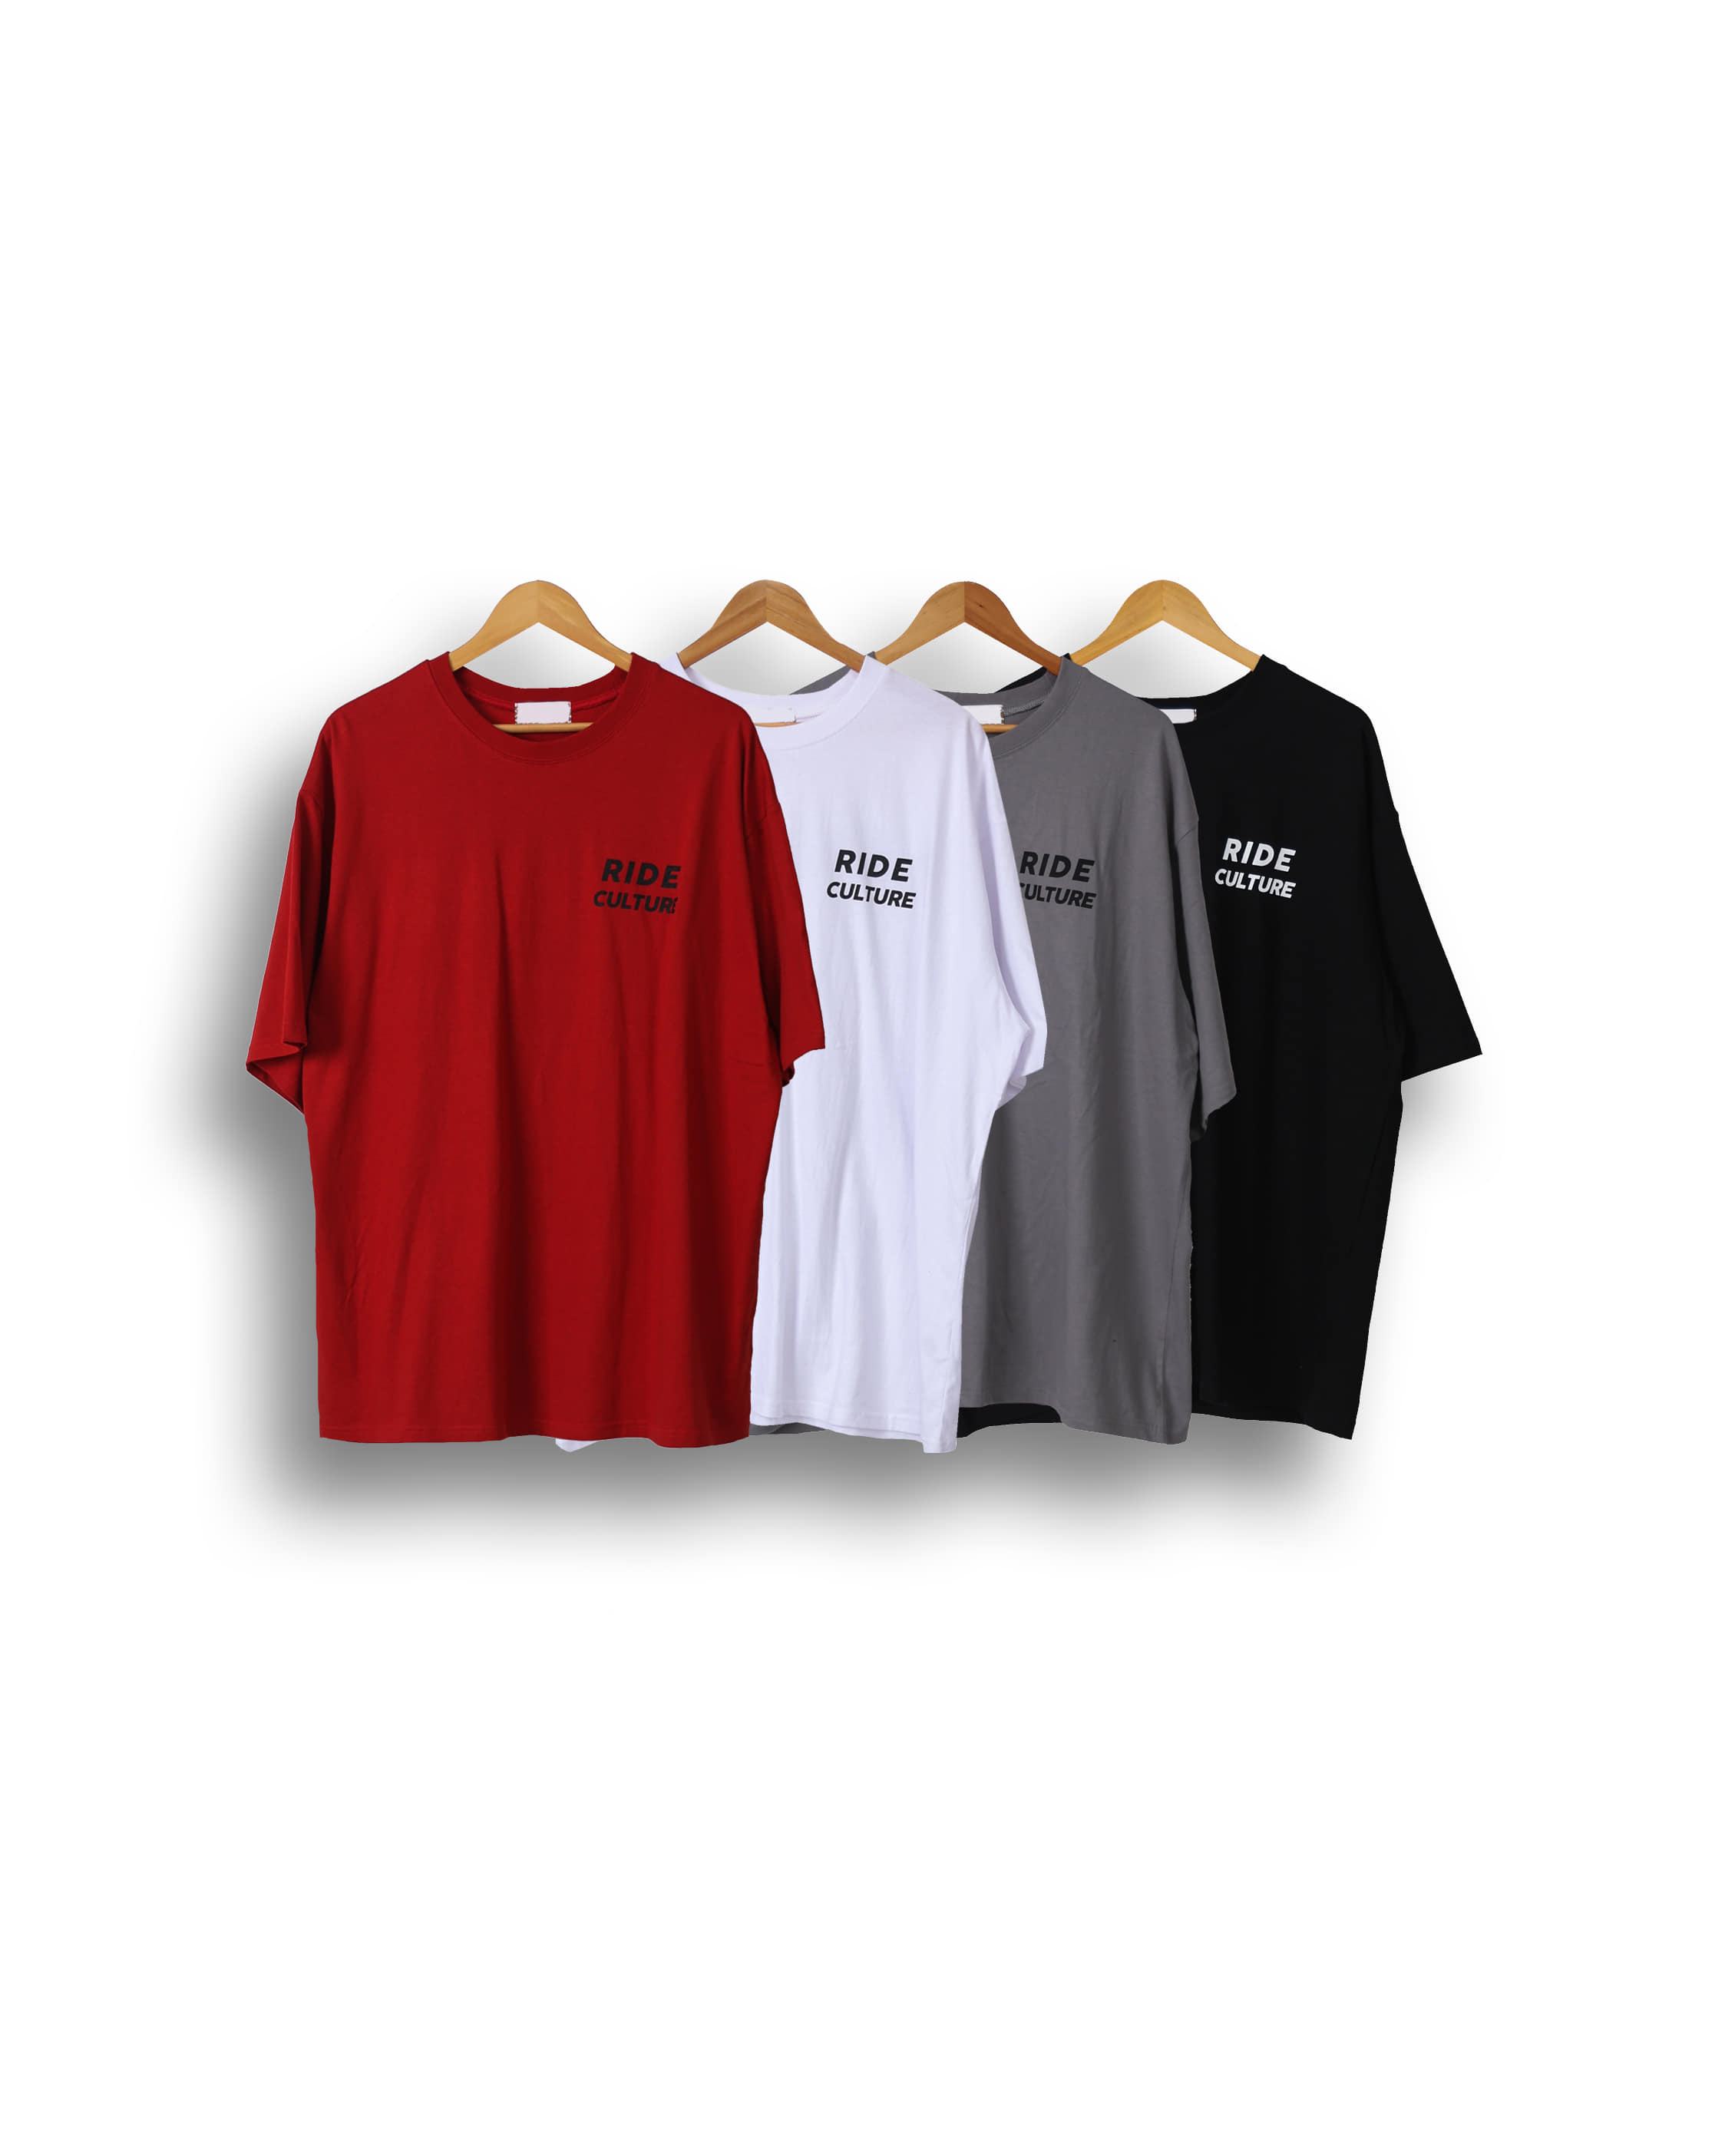 NINE ICON Ride Oversized T Shirts (Black/Gray/Red/White)